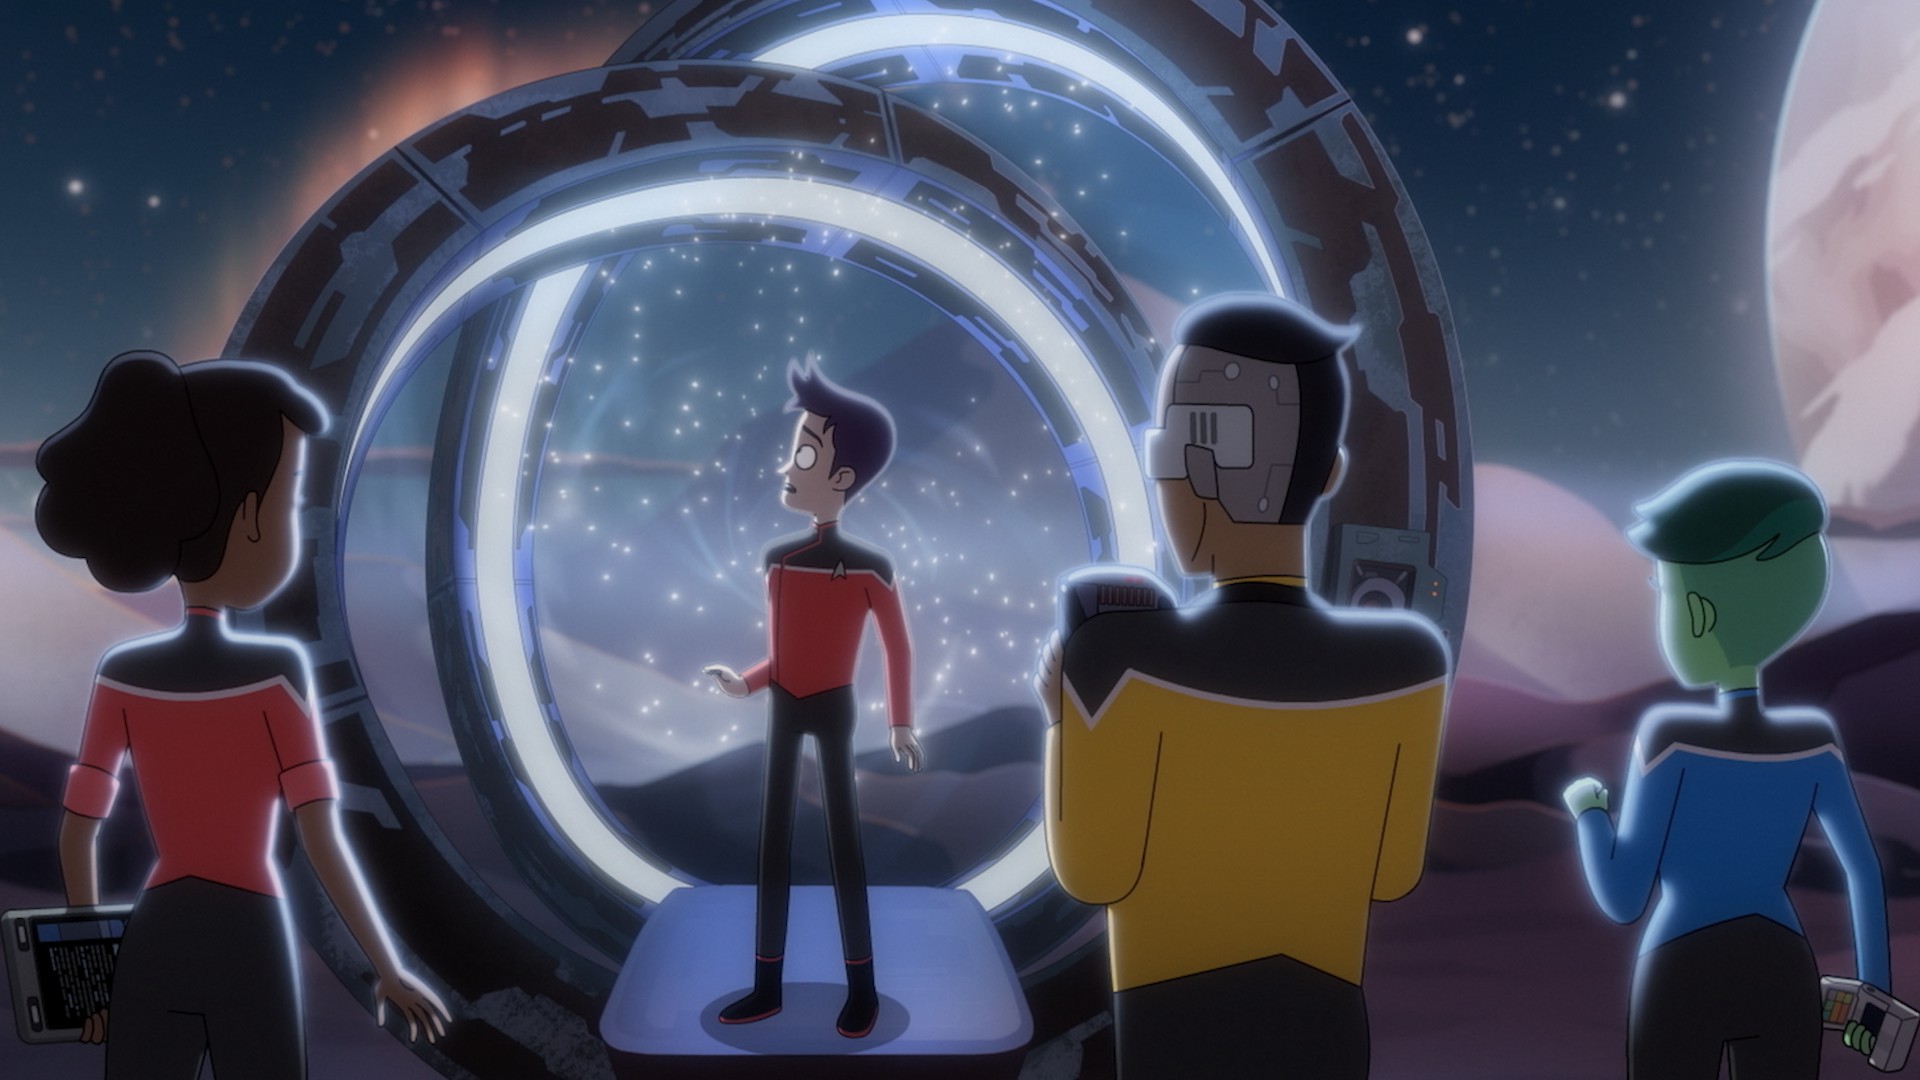 Trek: Strange New Worlds' Gets Animated In “Those Old TrekMovie.com